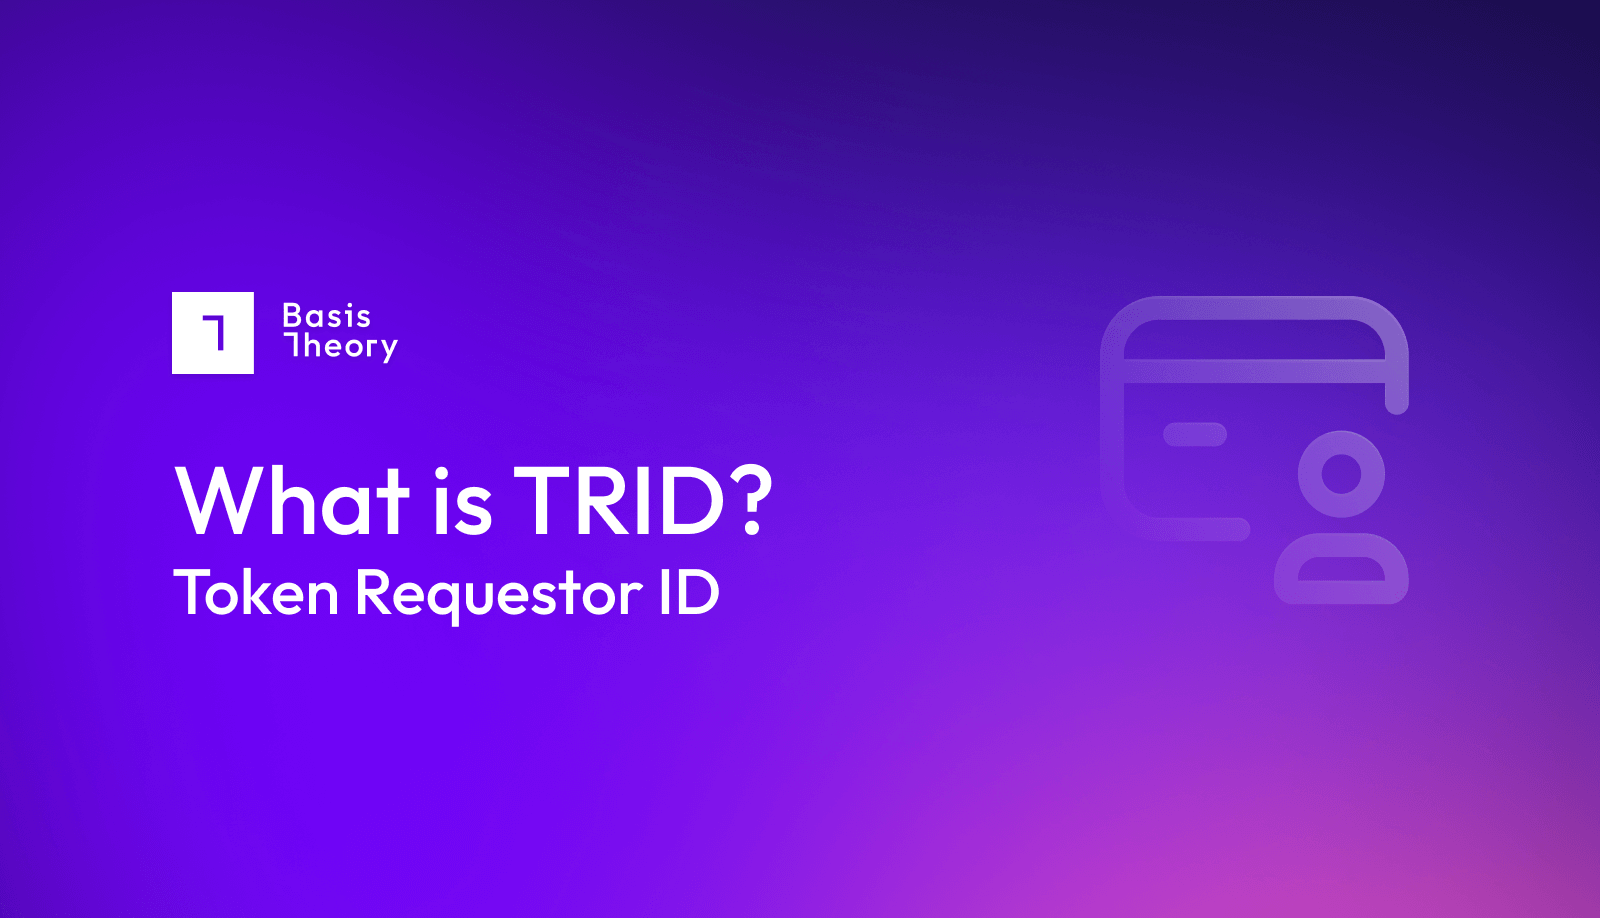 what is token requestor id?